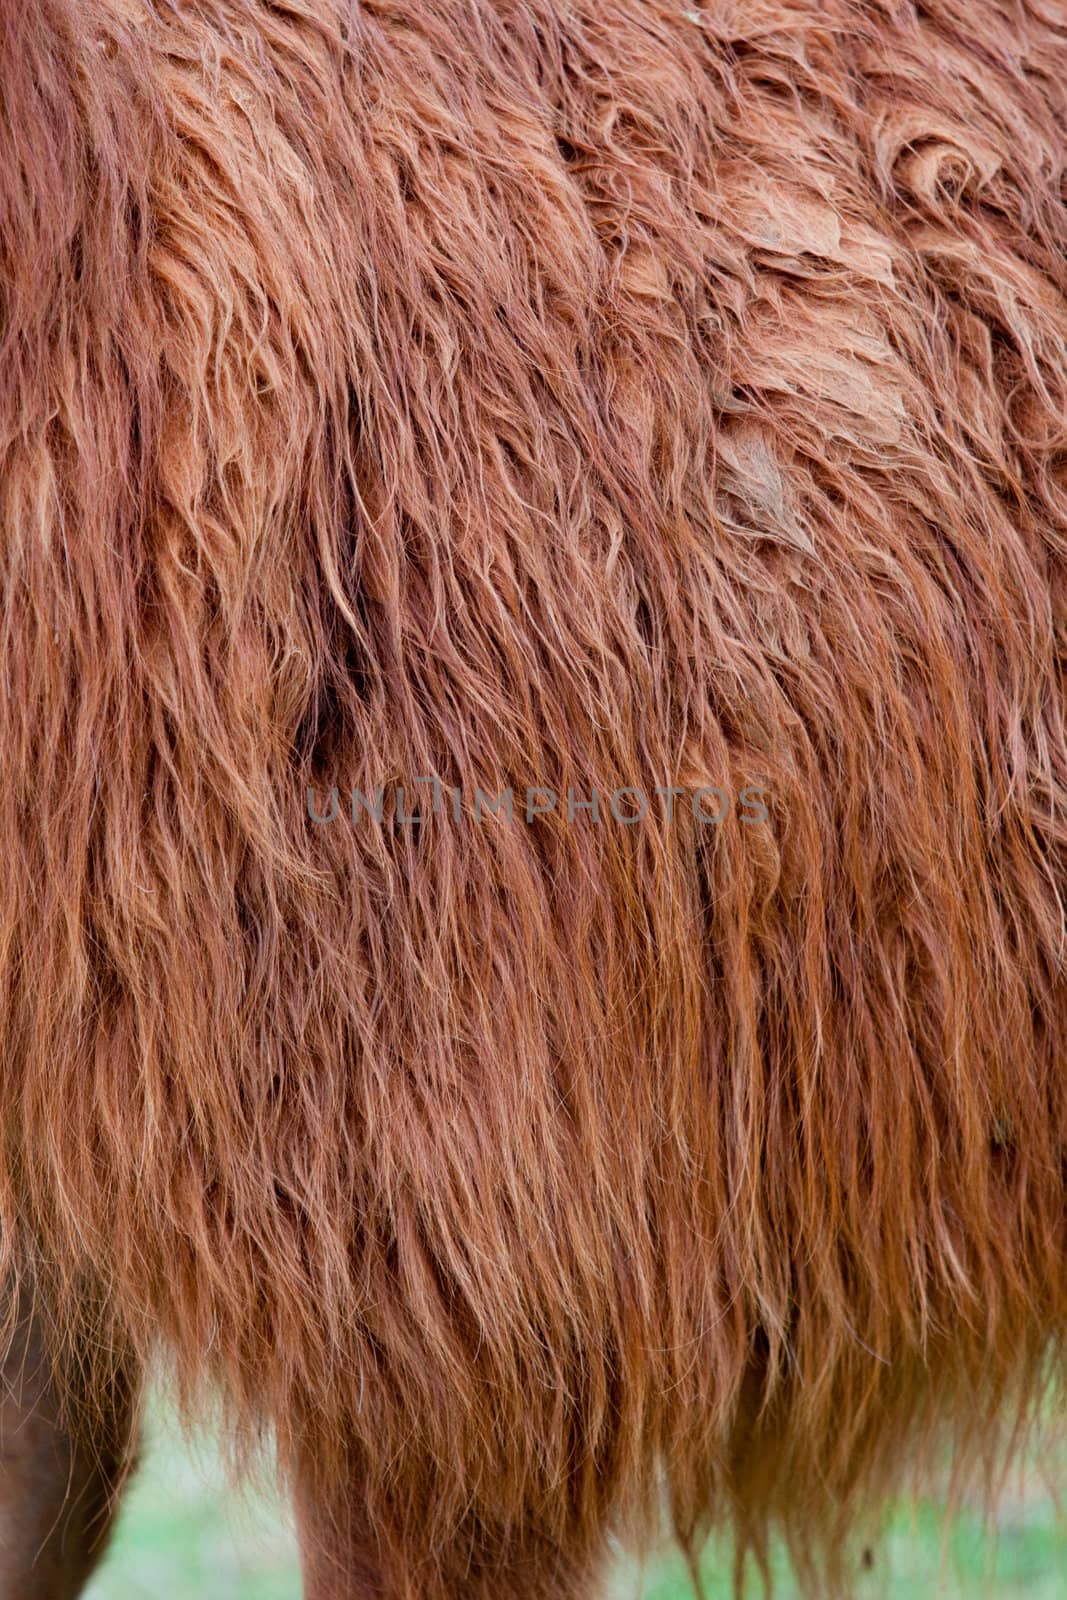 Detail shot of a llama's hair on its fur coat.